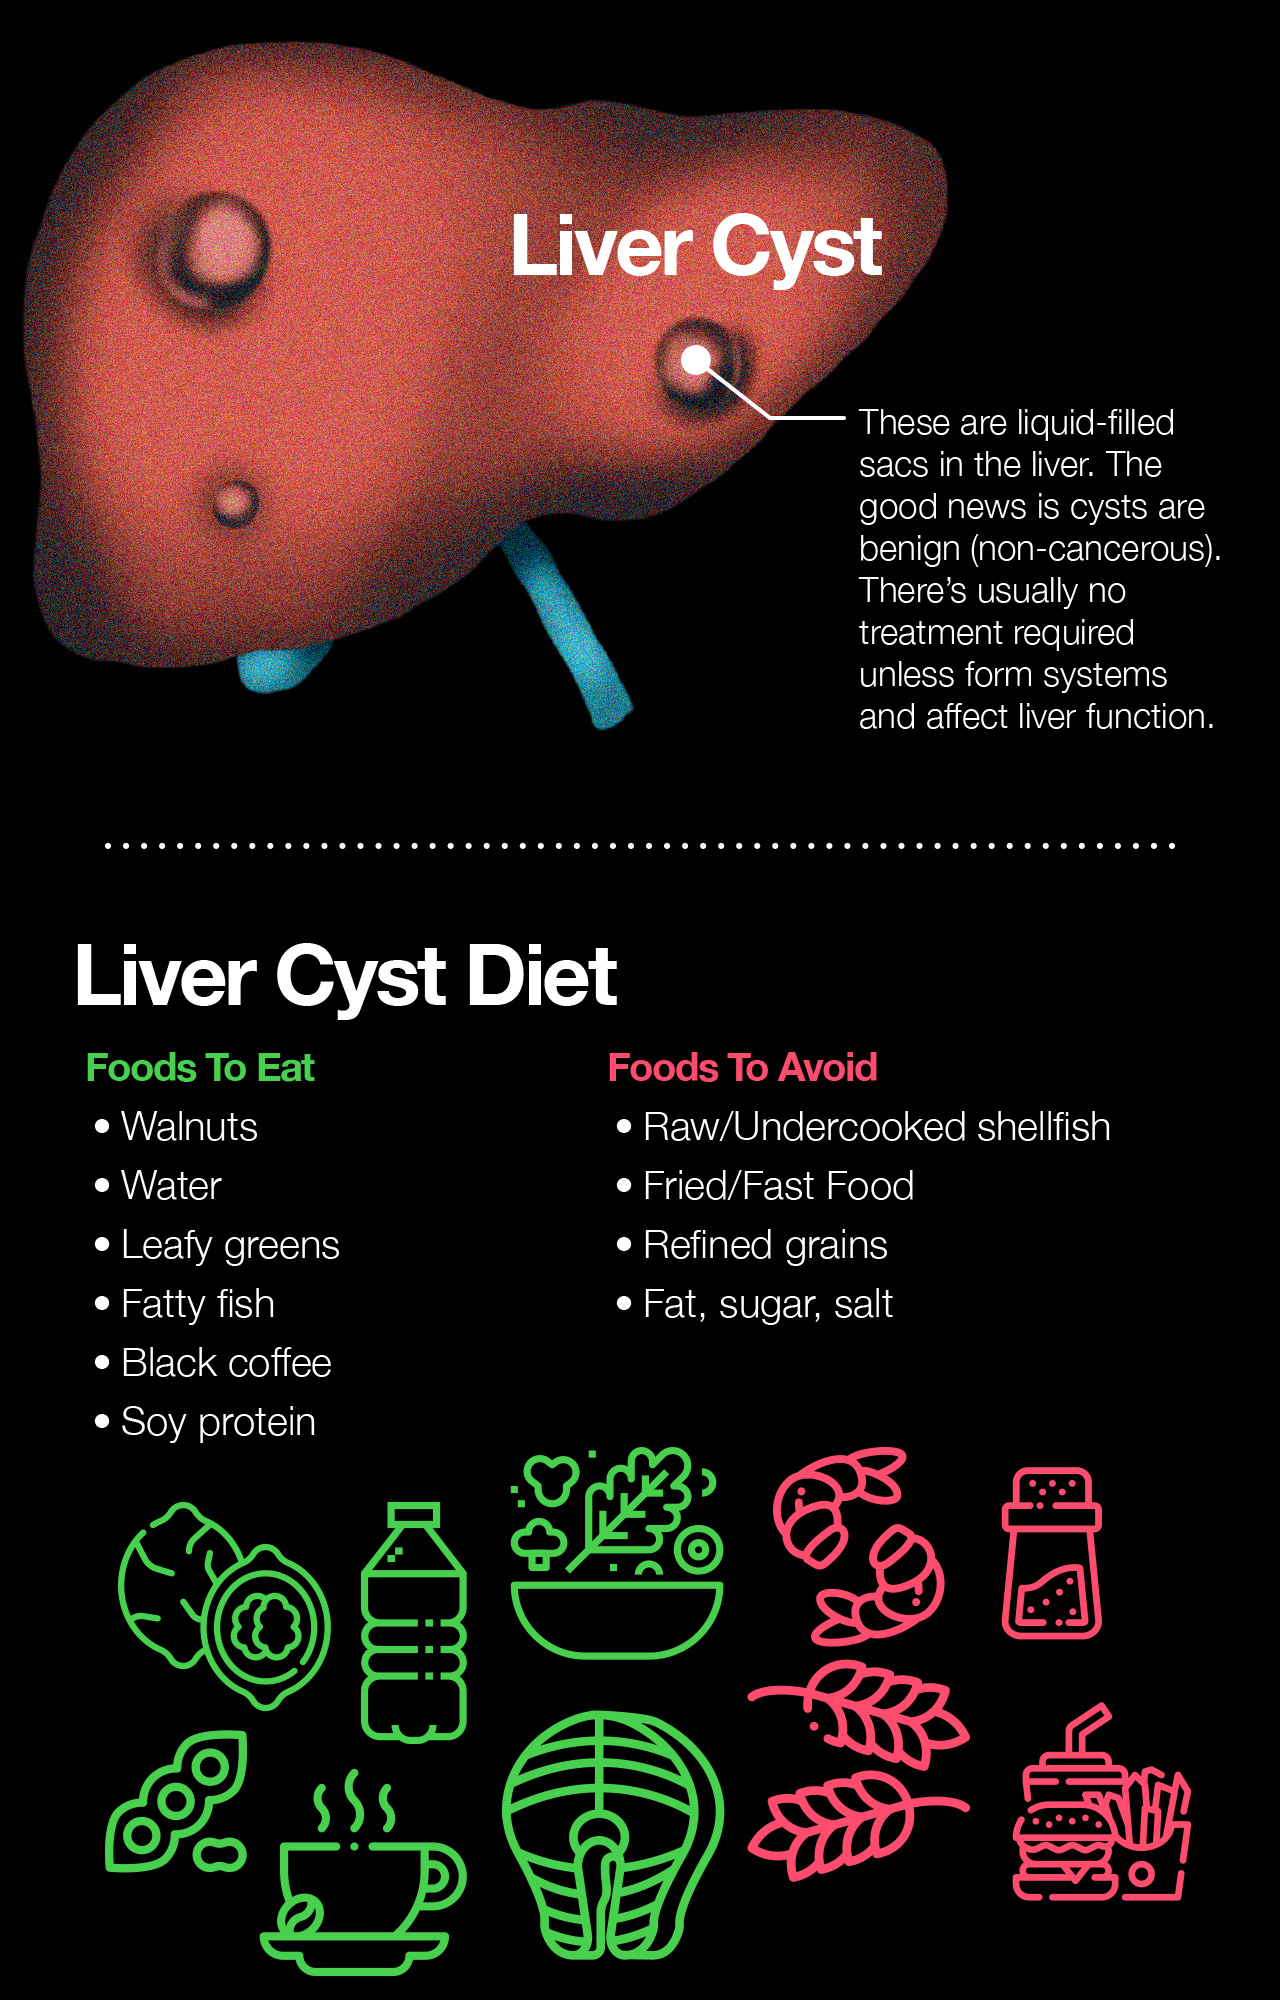 Liver Cyst Diet